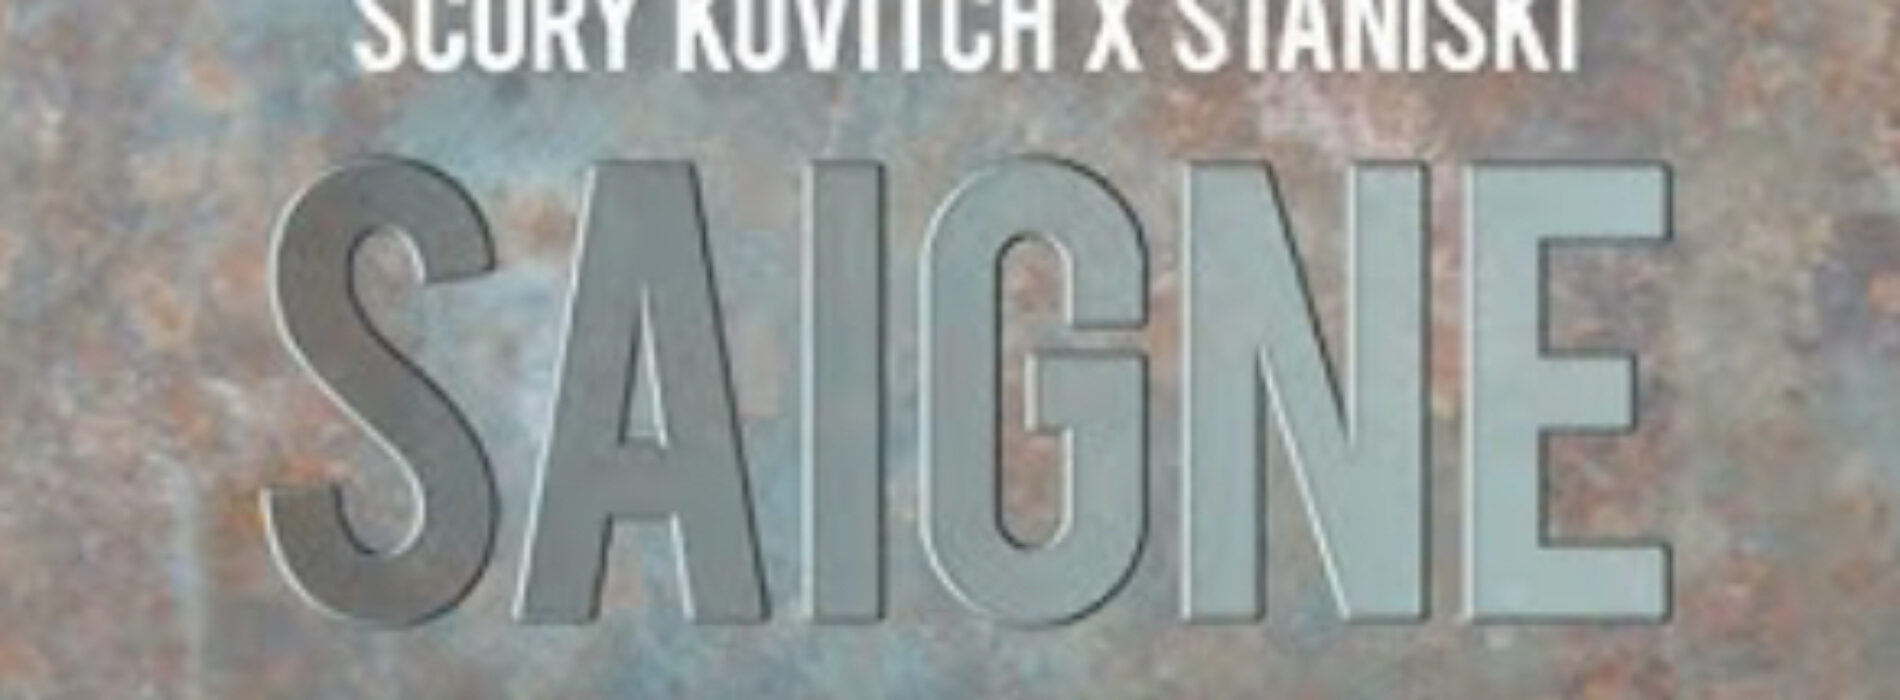 Scory Kovitch x Staniski x Warped x Kaf Malbar x Mali – SAIGNÉ (Audio Video) – Juin 2023